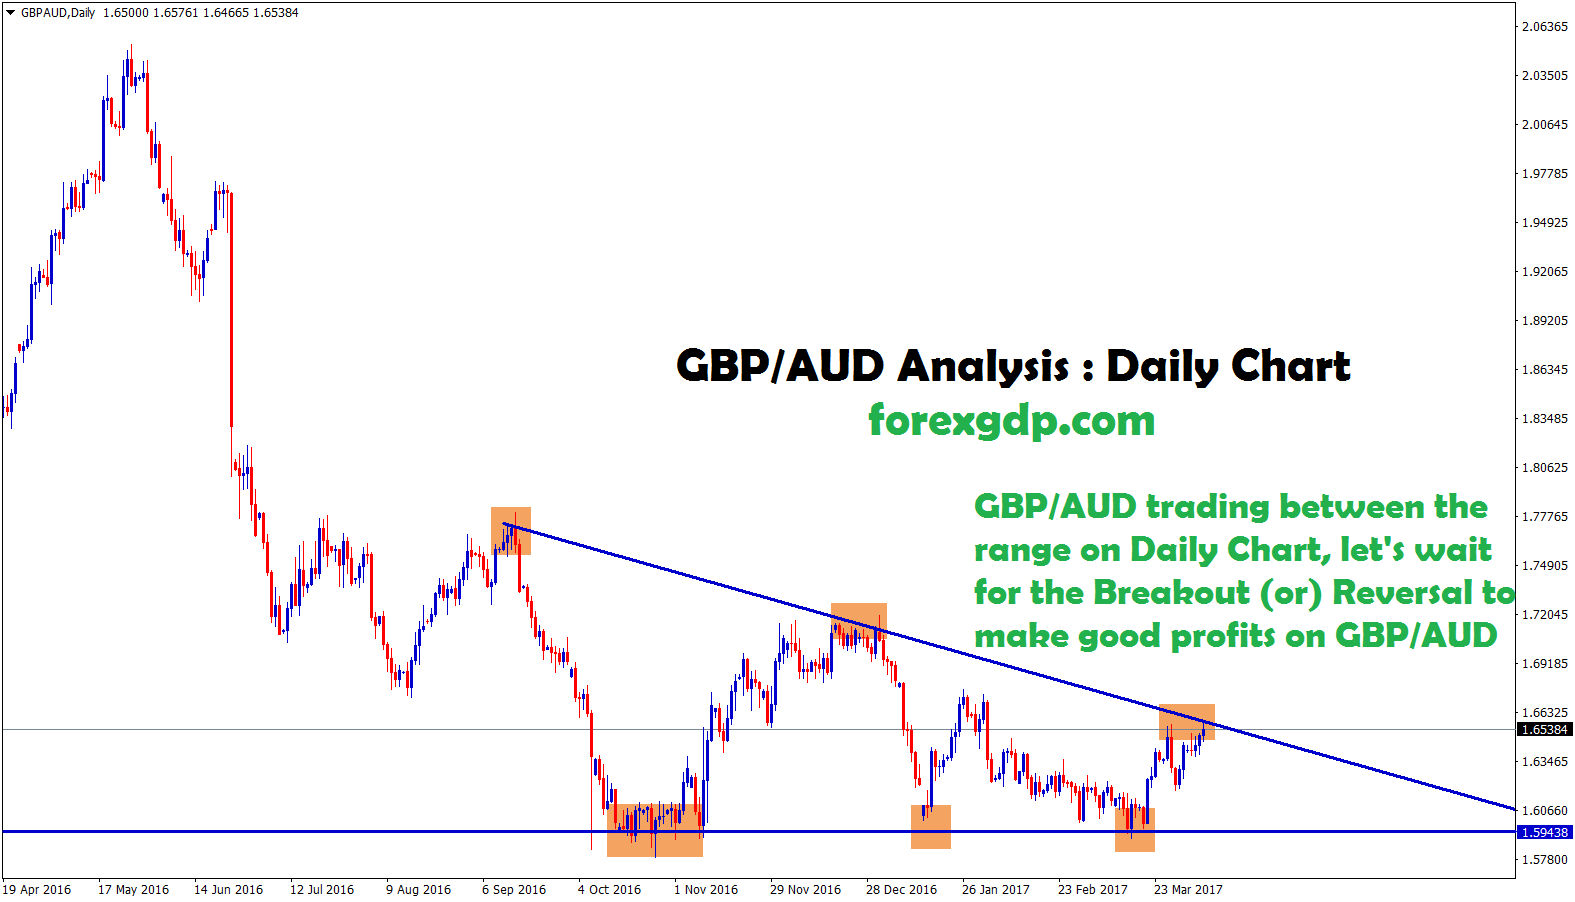 gbpaud descending triangle chart pattern